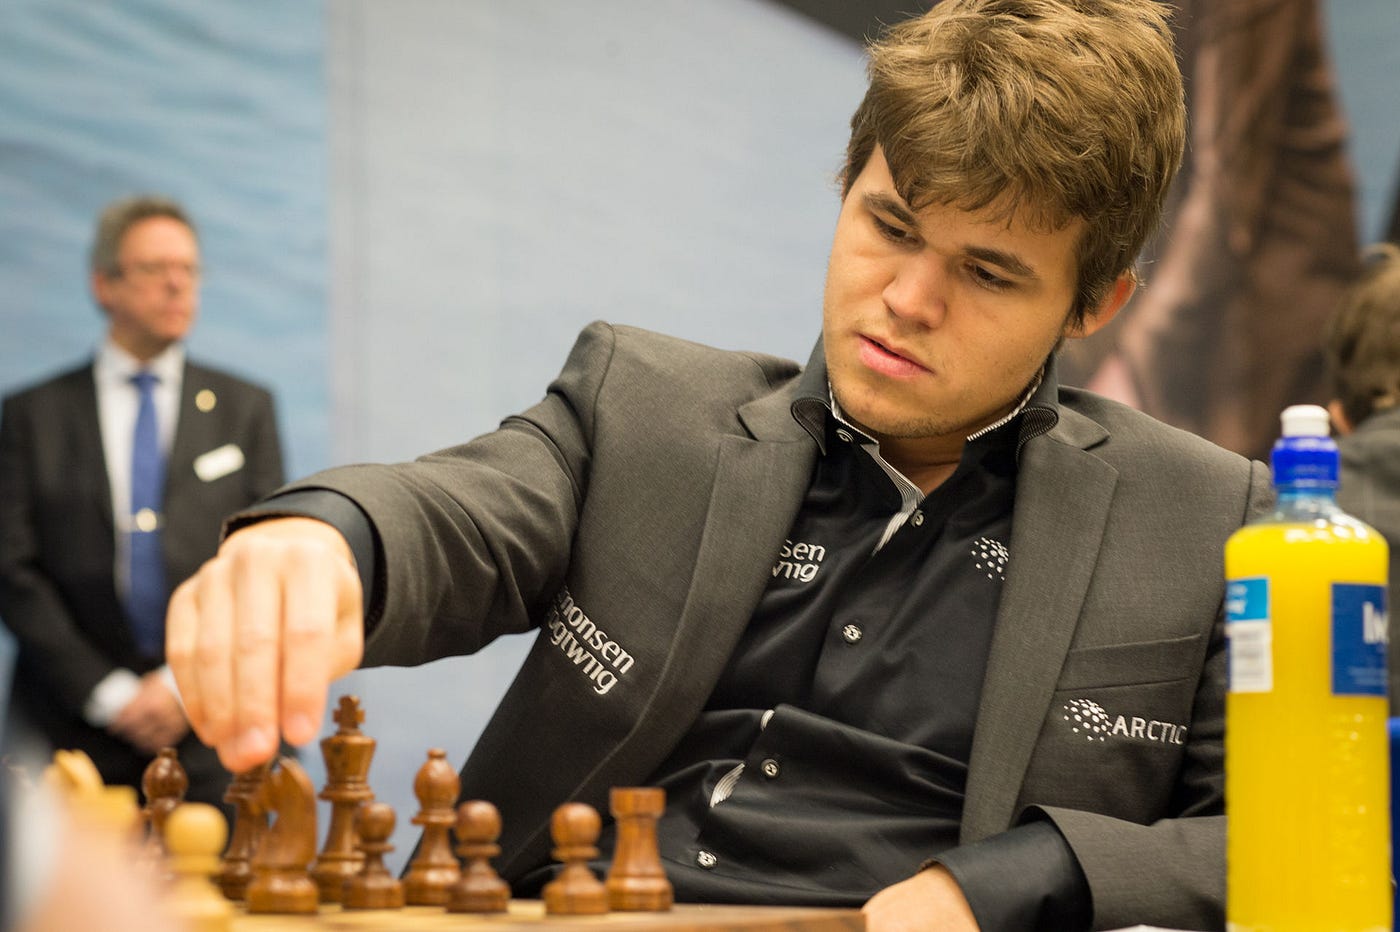 Magnus Carlsen IQ, Age, Rating, Ranking